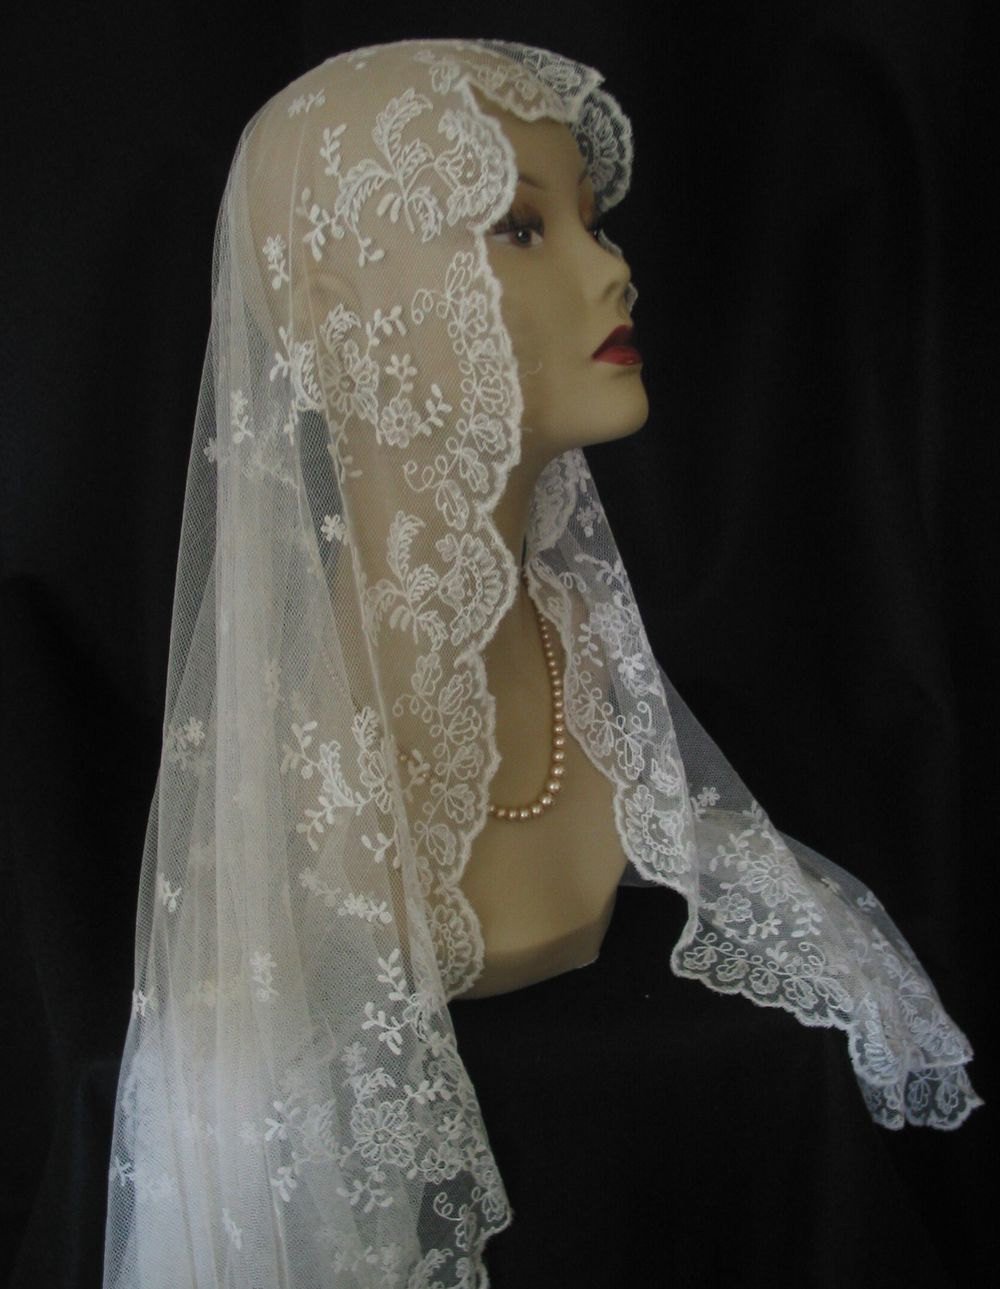 Antique Wedding Veils
 1915 Antique Lace Wedding Veil